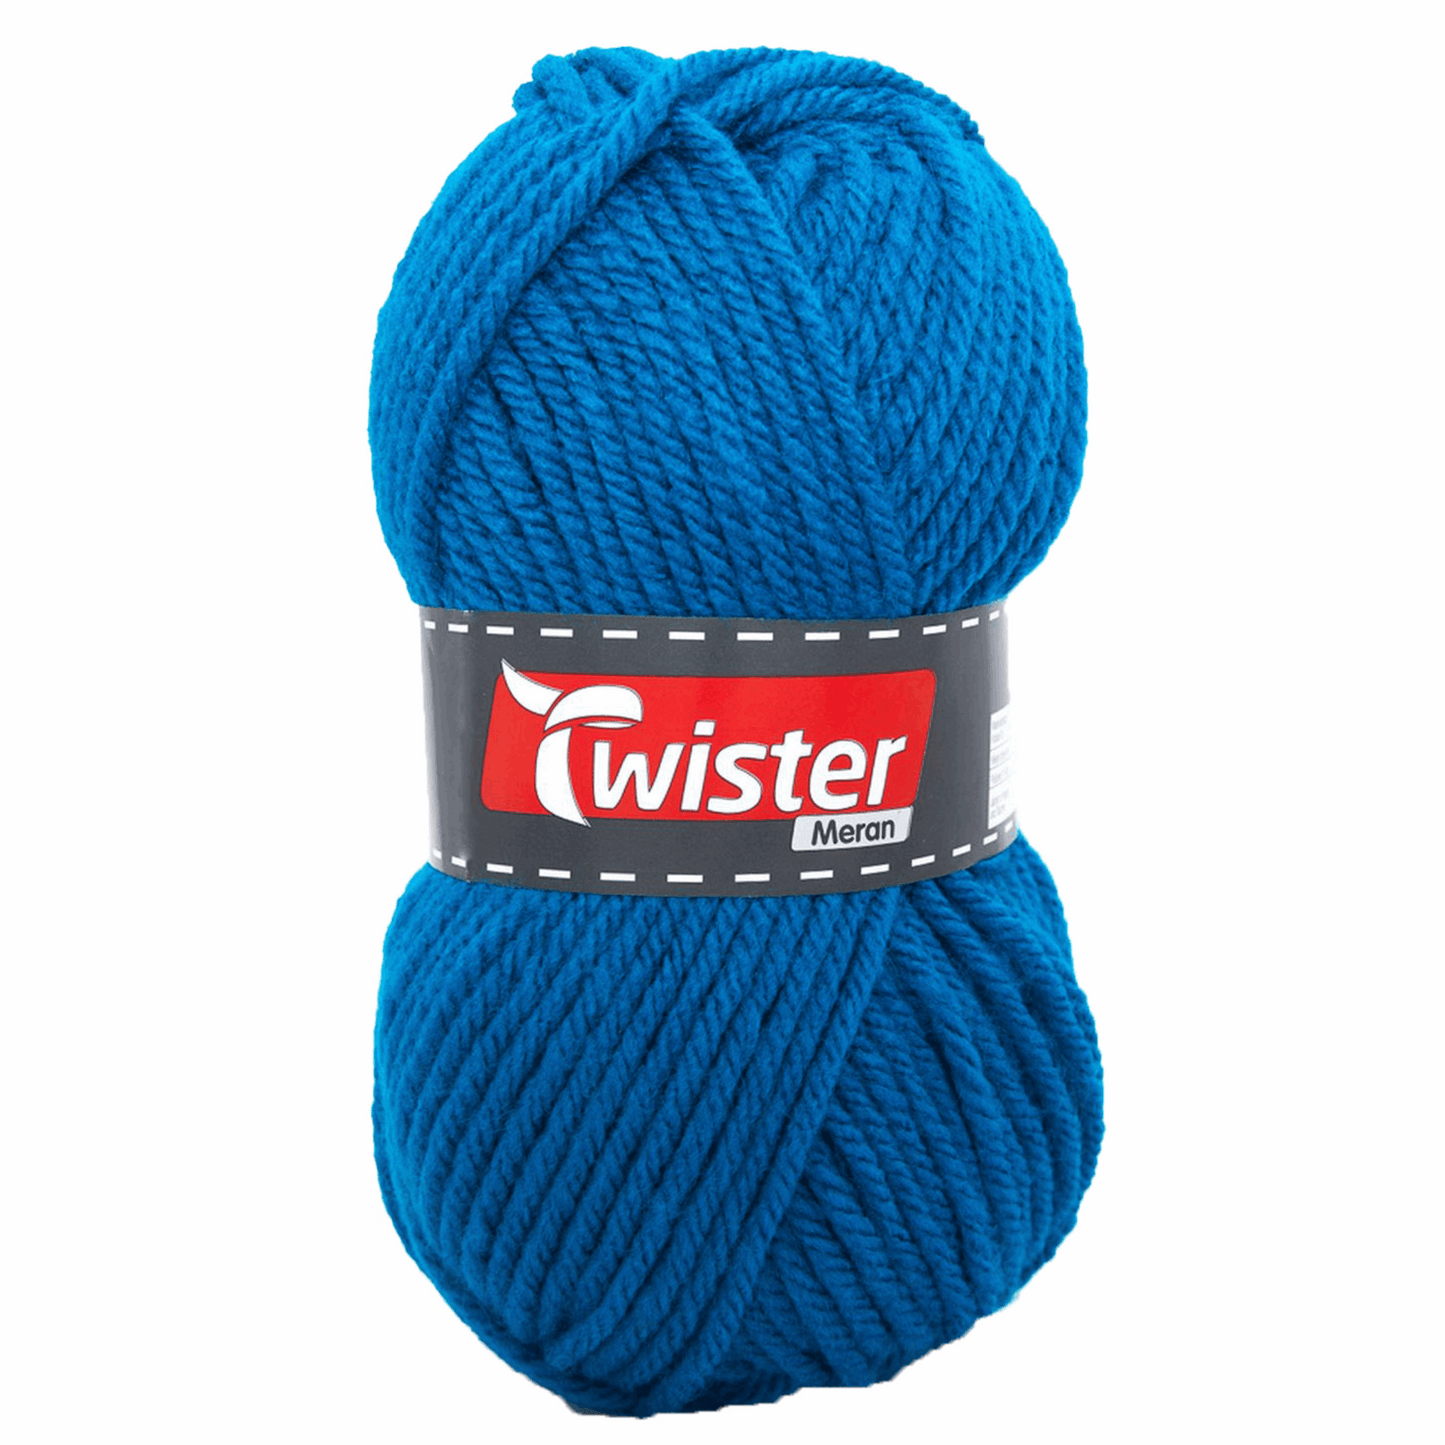 Twister Meran 100g, 98534, color petrol 58